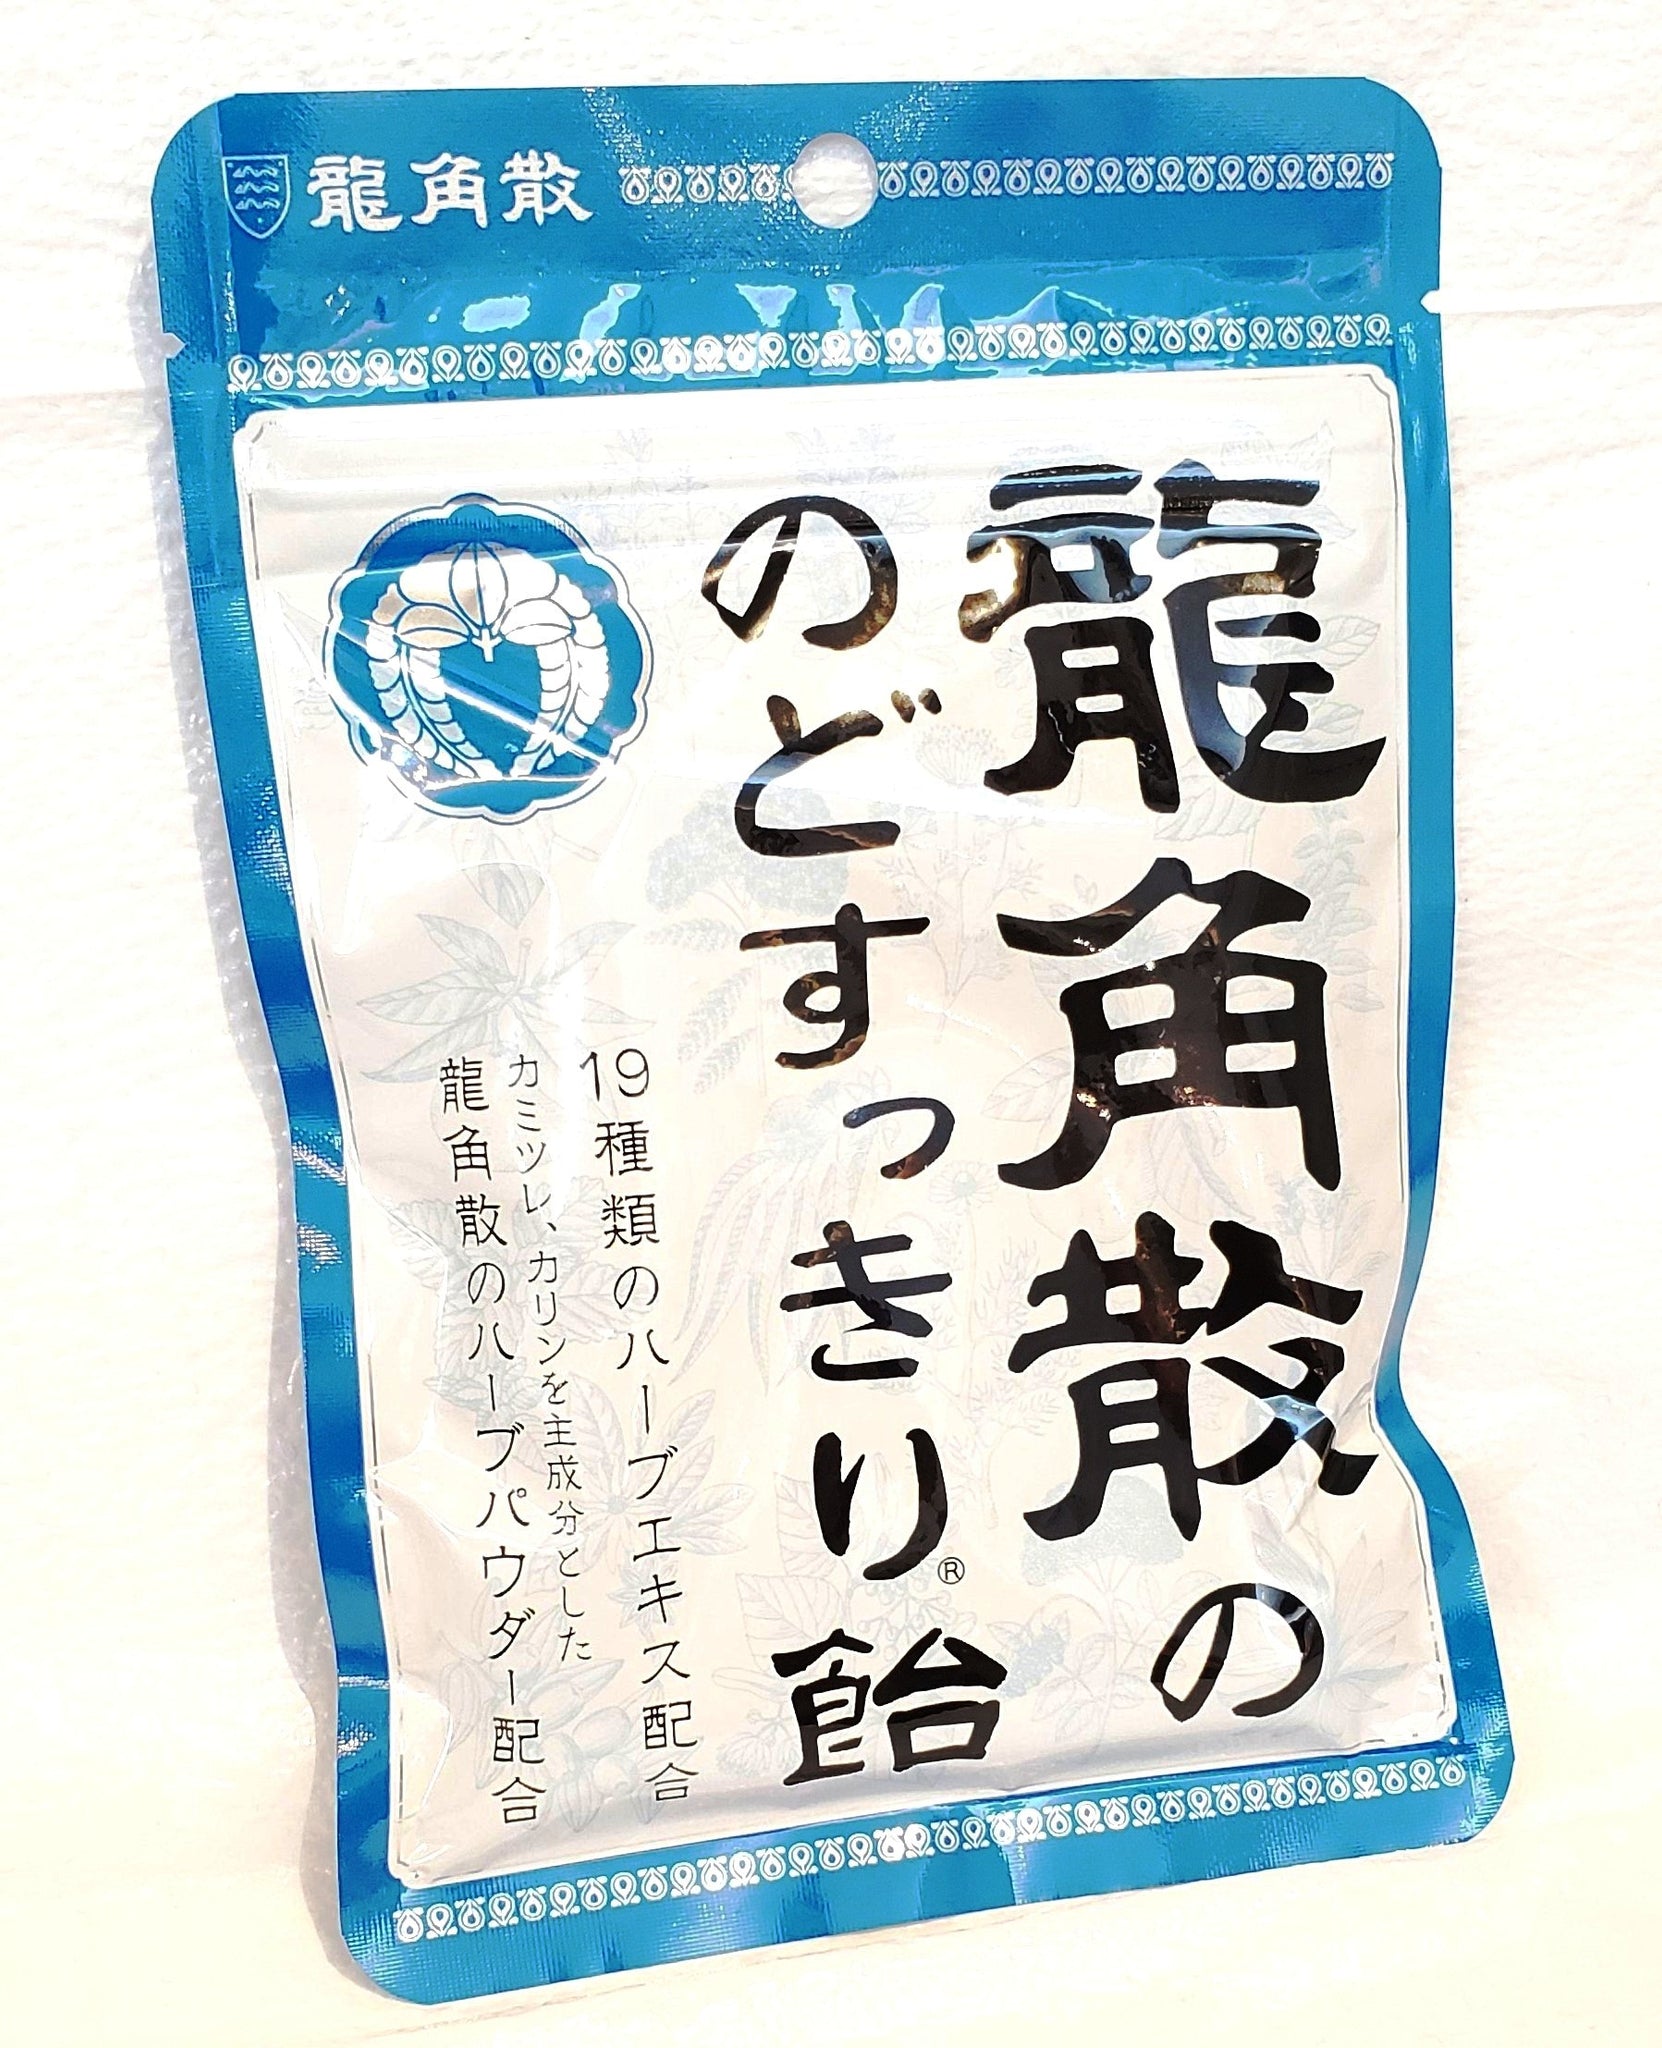 Ryukakusan nodo sukkiri ame herb & mint candy (bag) 日本龍角散香草薄荷糖 (袋裝)